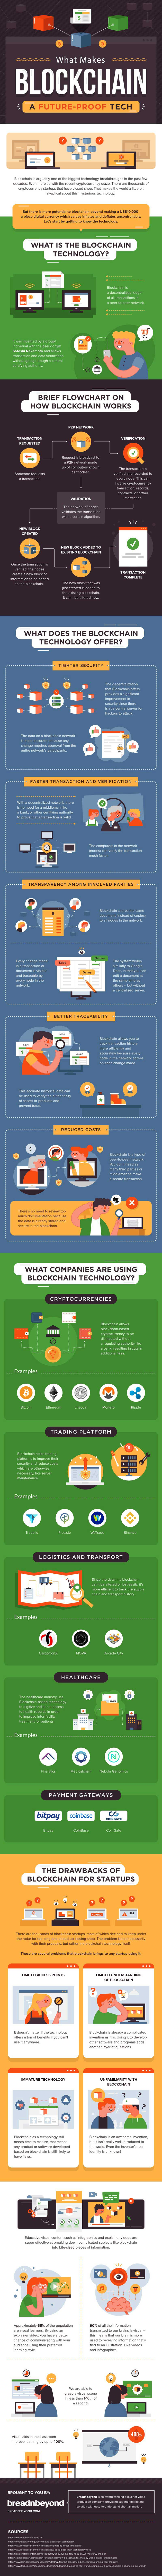 Blockchain Technology Infographic